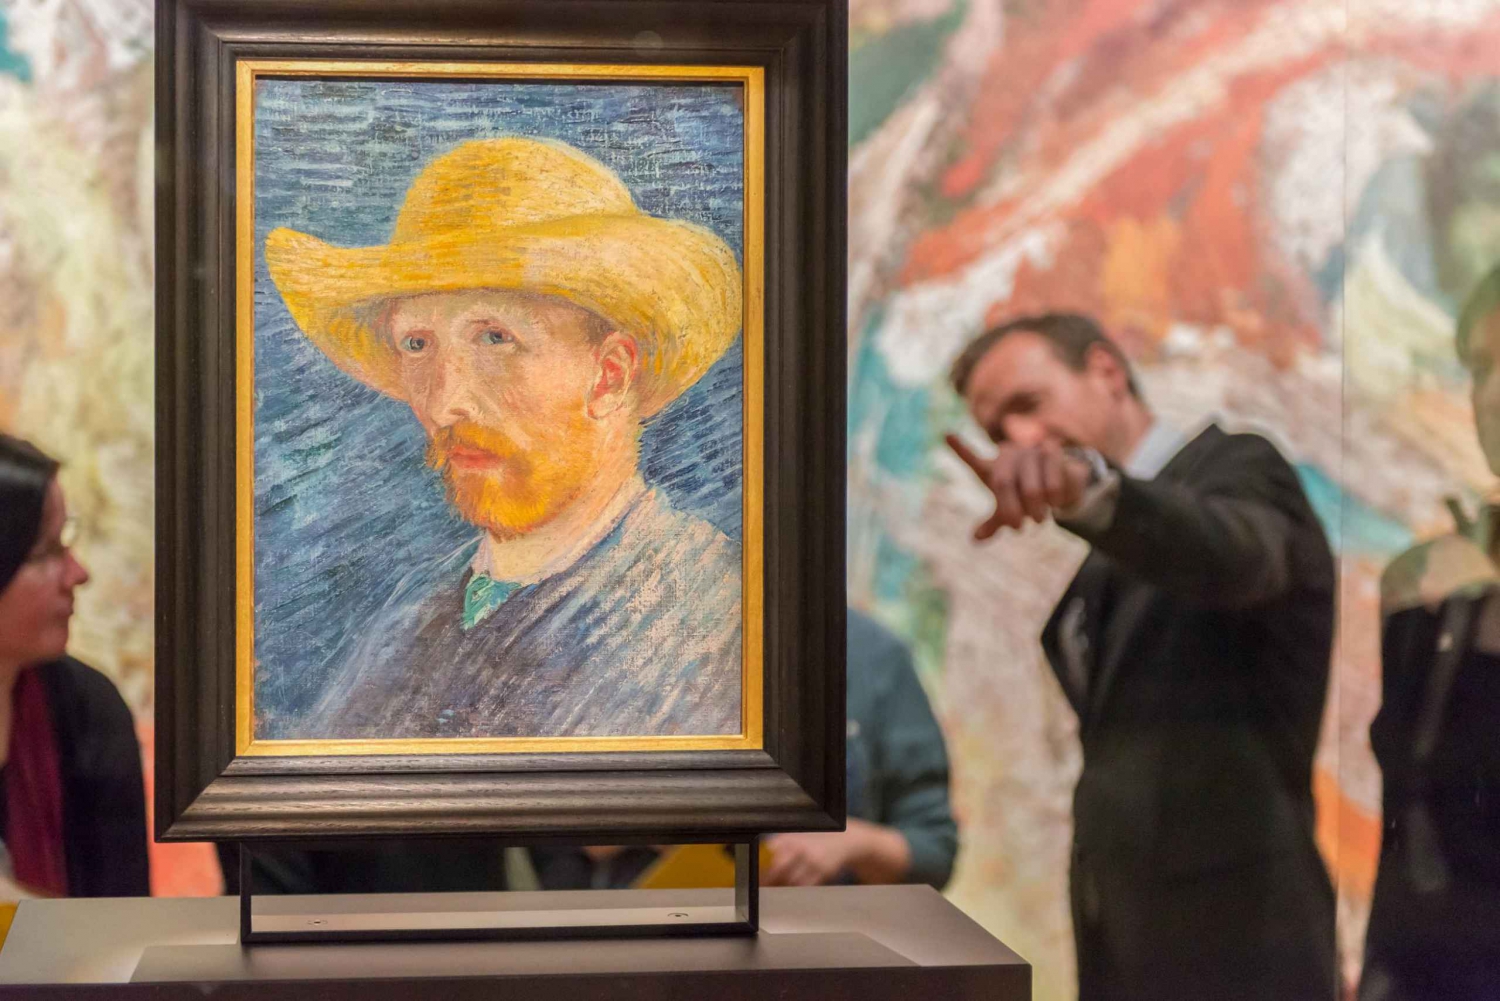 Amsterdam: Bilet do Muzeum Van Gogha i rejs po kanale miejskim